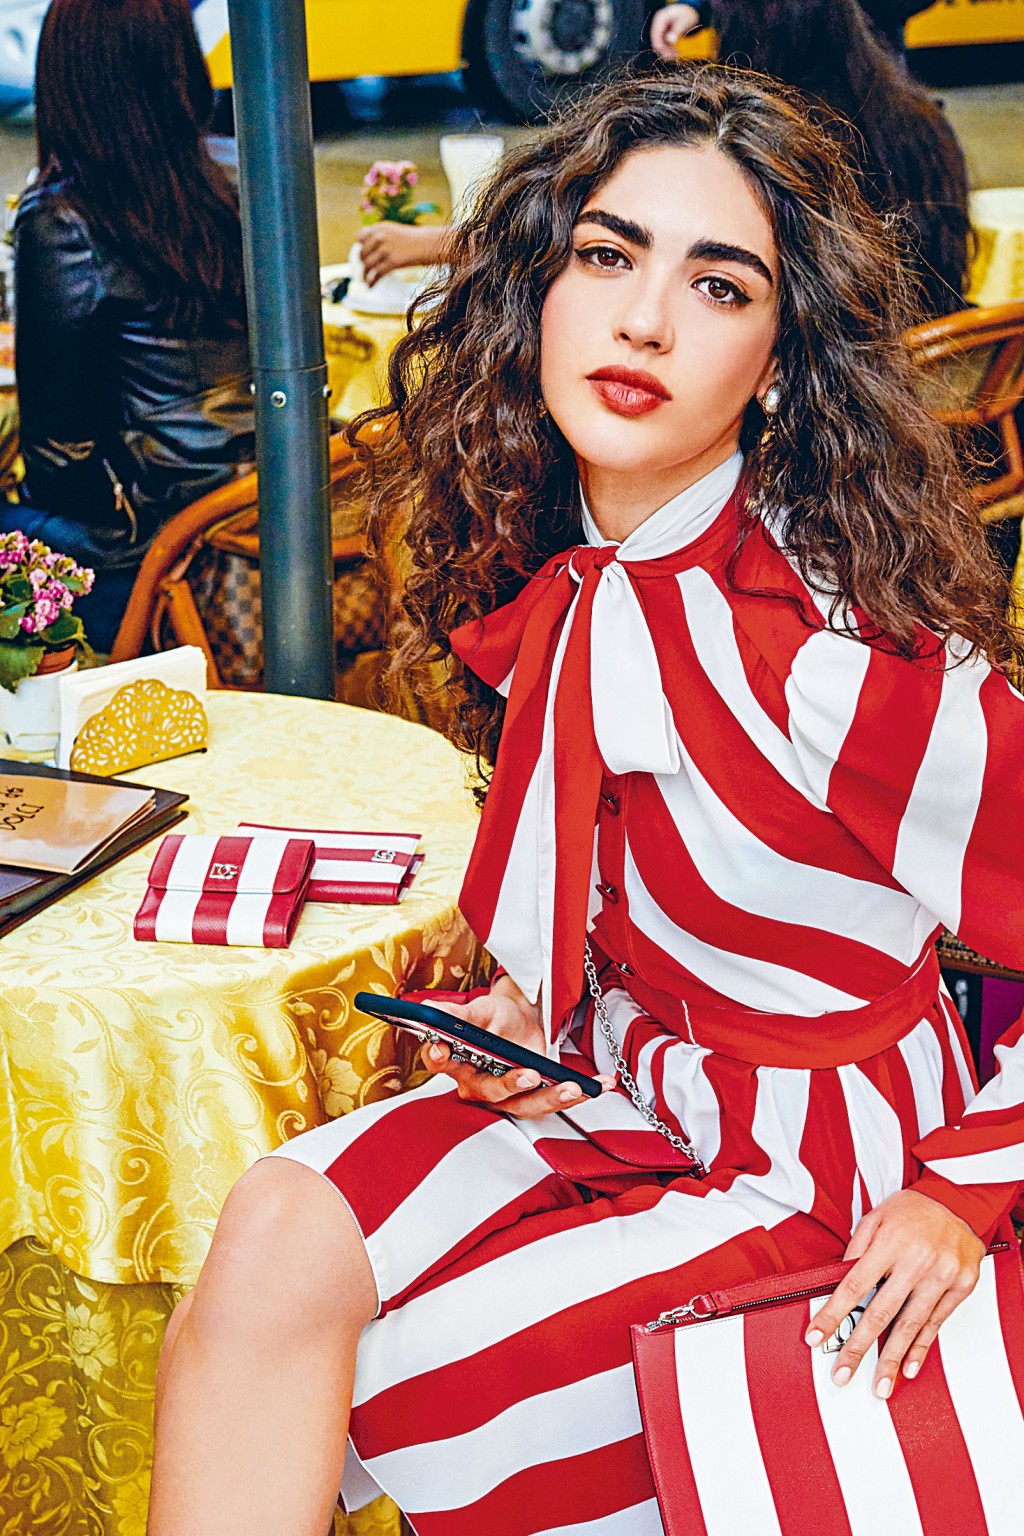 Dolce&Gabbana度假系列红白色条纹连身裙，衬以同色条纹小皮具及手袋，演绎Pattern-on-pattern的时尚美态。